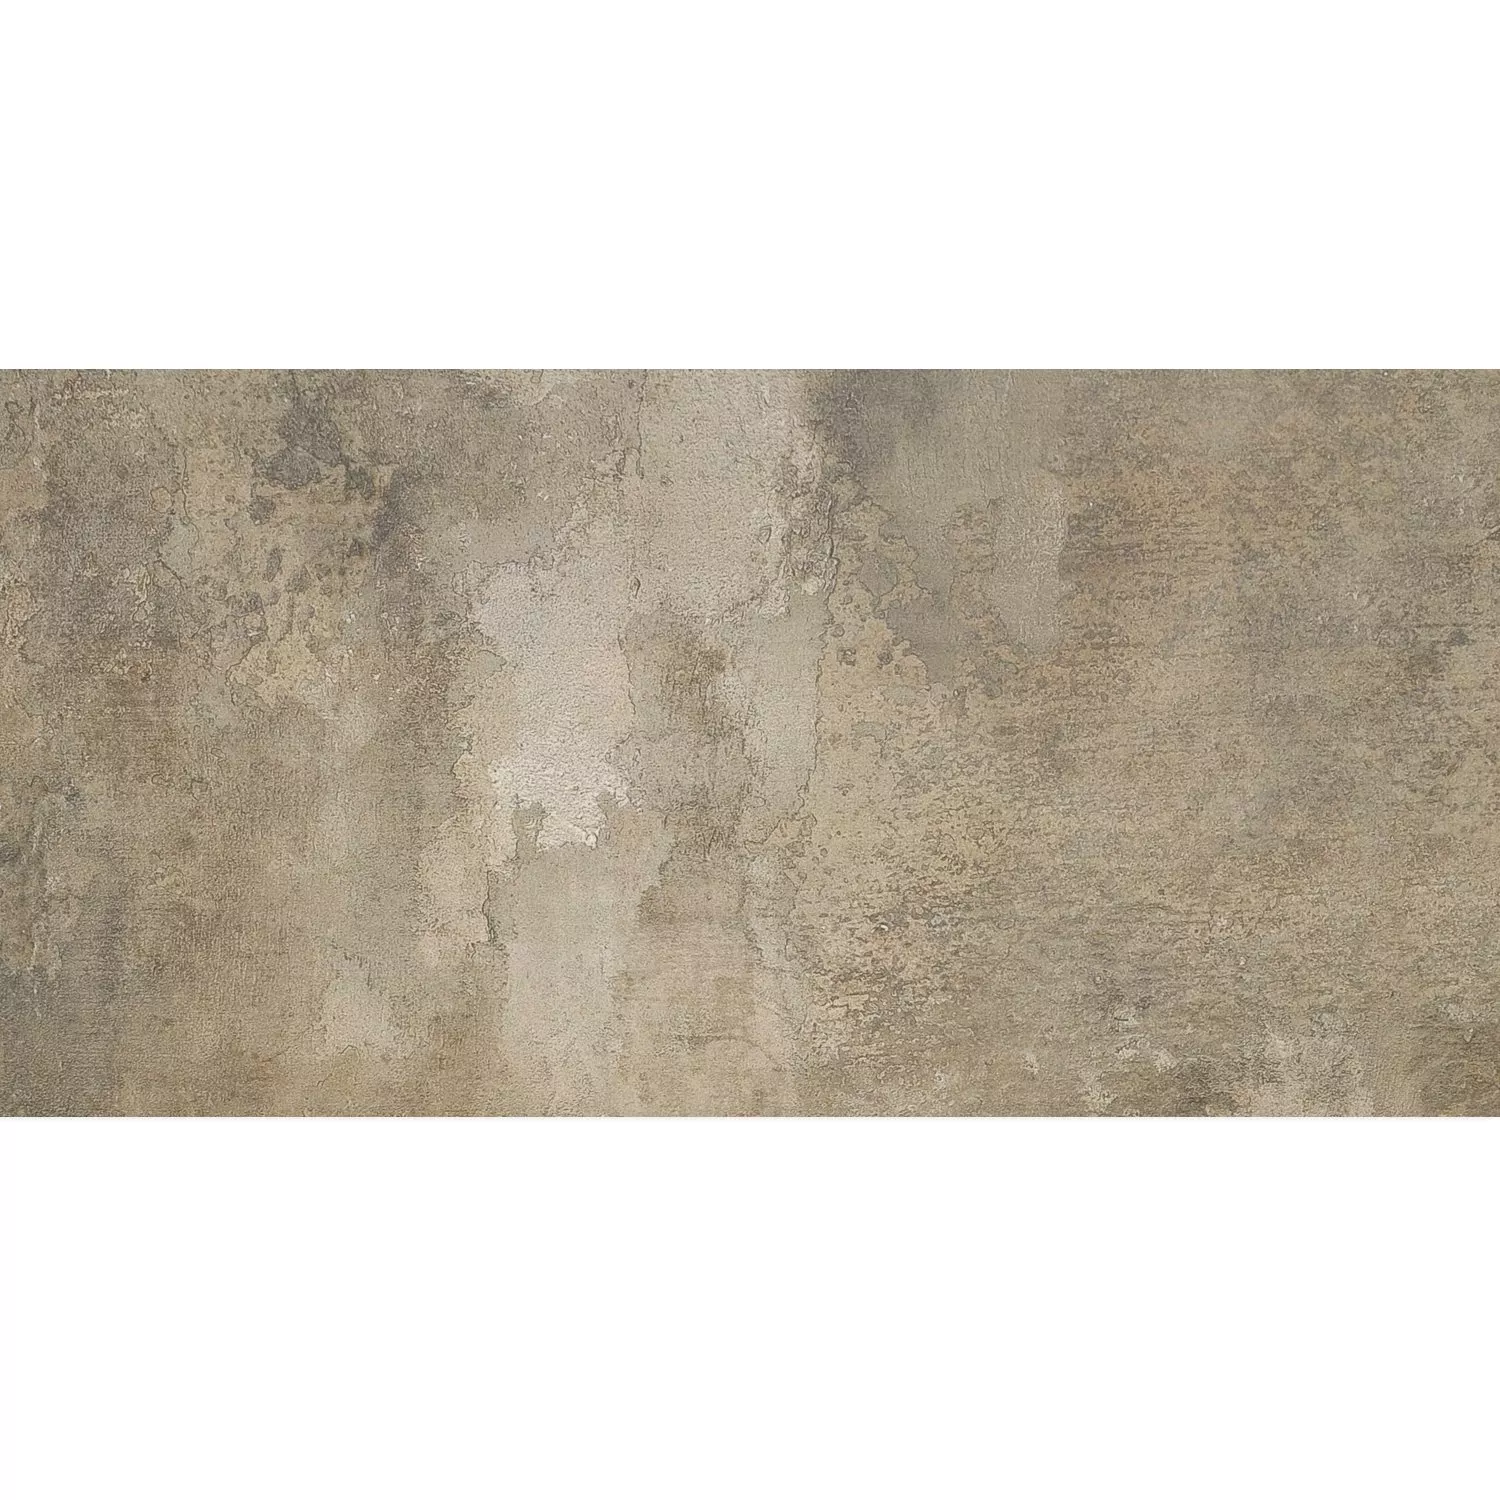 Vzorek Podlahové Dlaždice Haarlem Hnědá 30x60cm